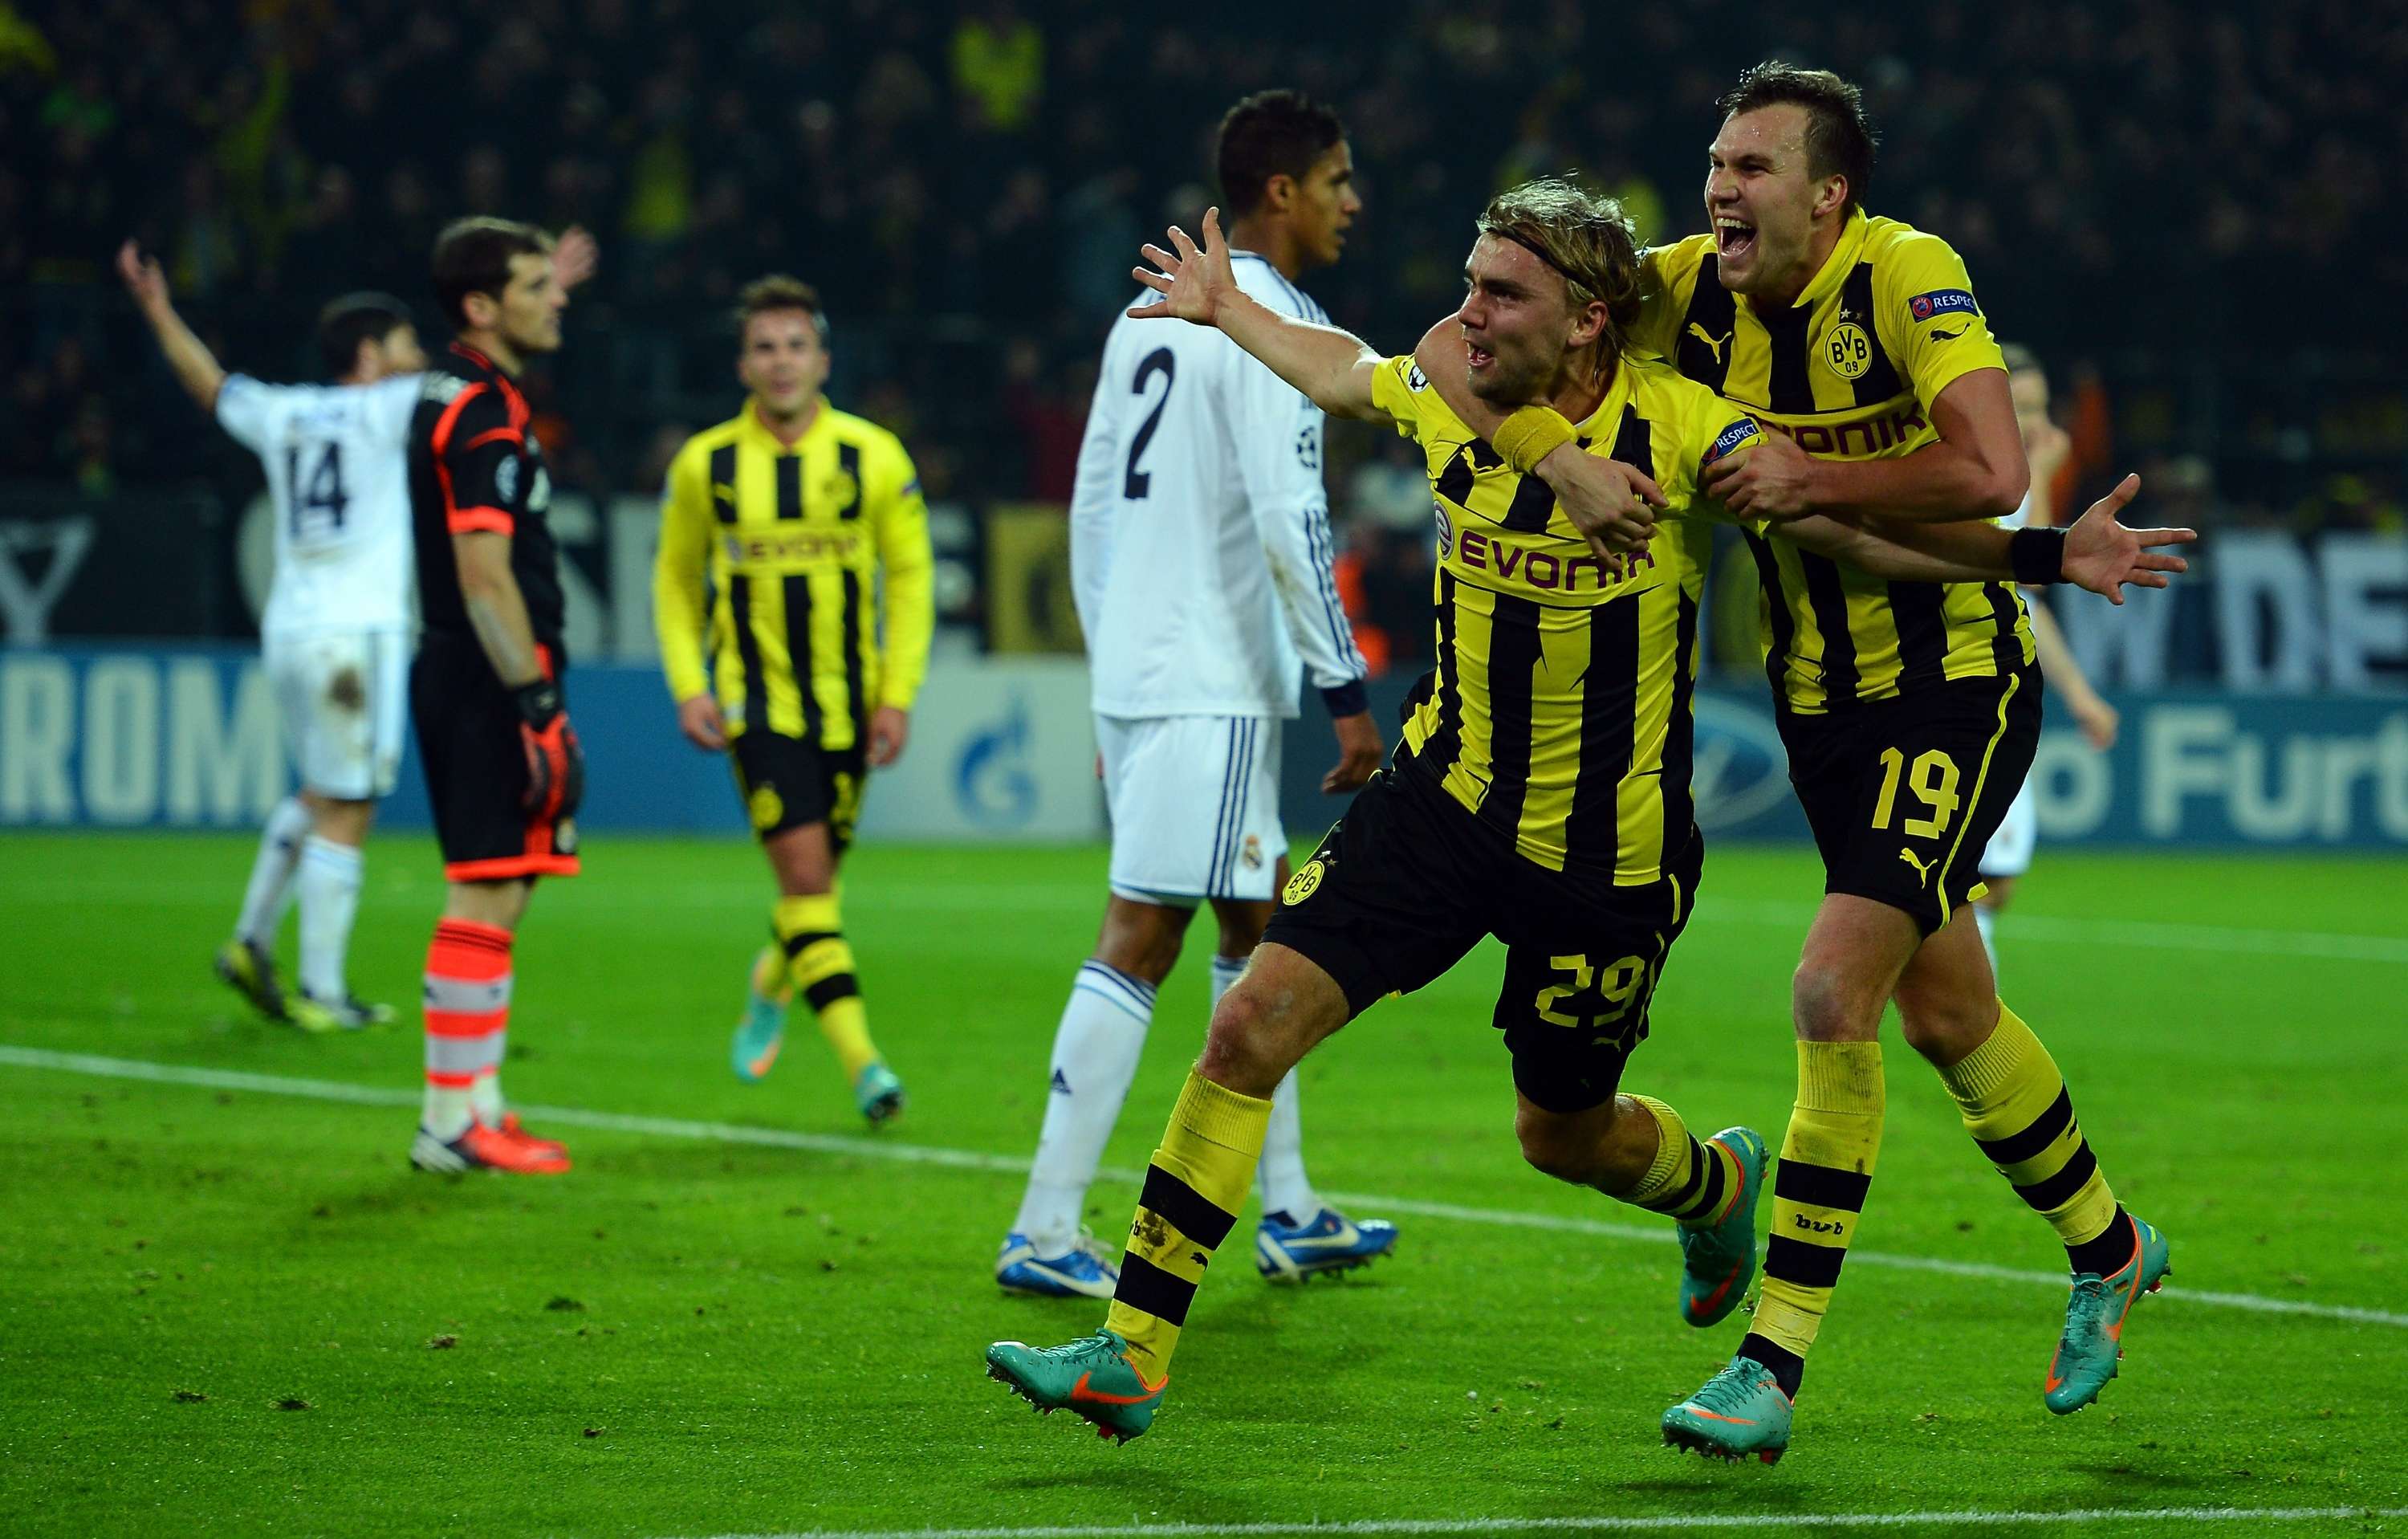 Dortmund vs Real Madrid